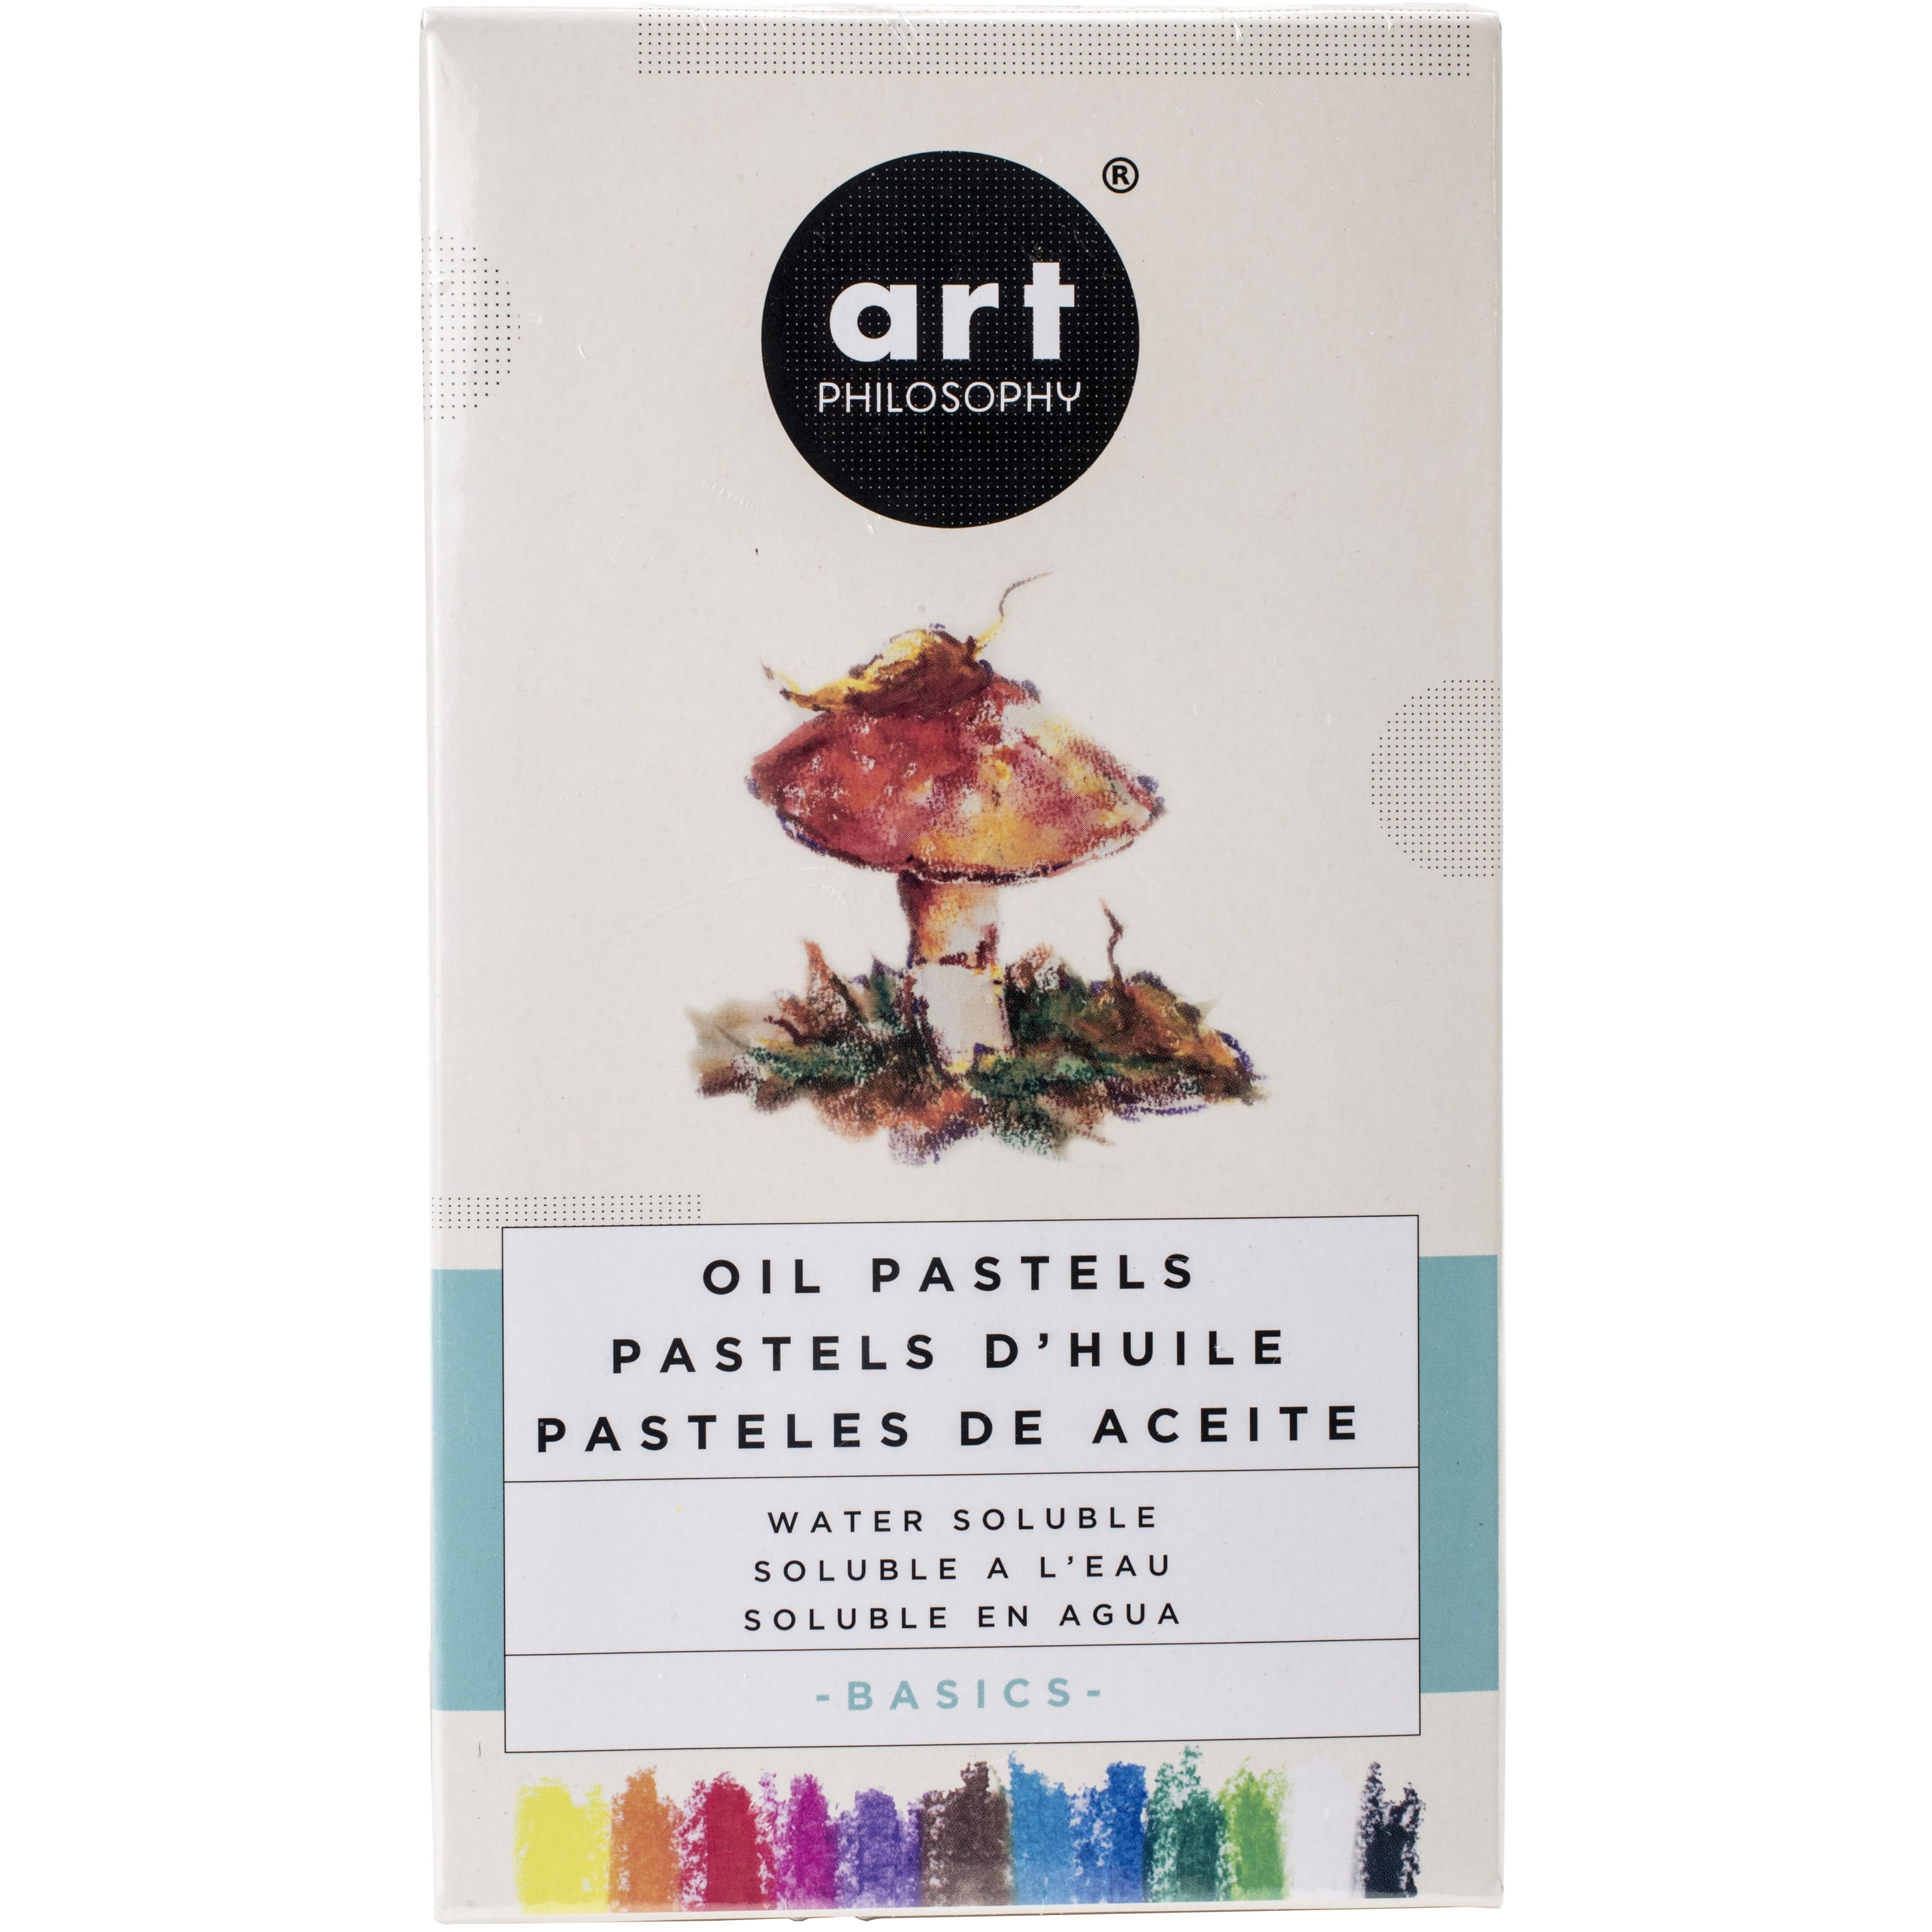 Prima® Art Philosophy® 12 Color Water Soluble Oil Pastels